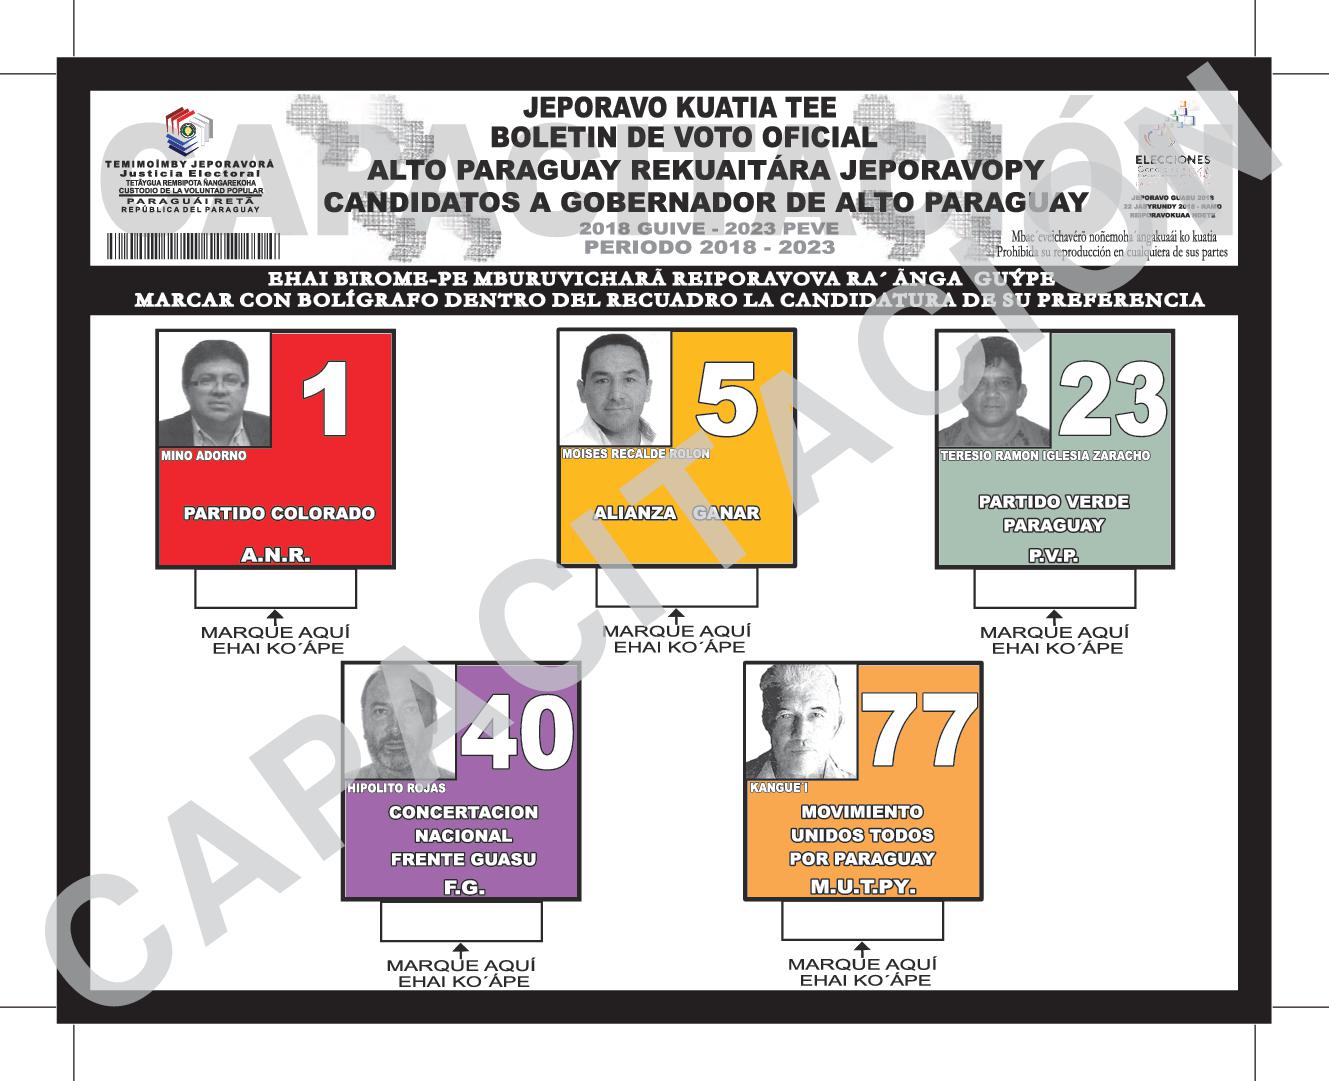 Boletin de voto de candidatos a GOBERNADOR de ALTO PARAGUAY